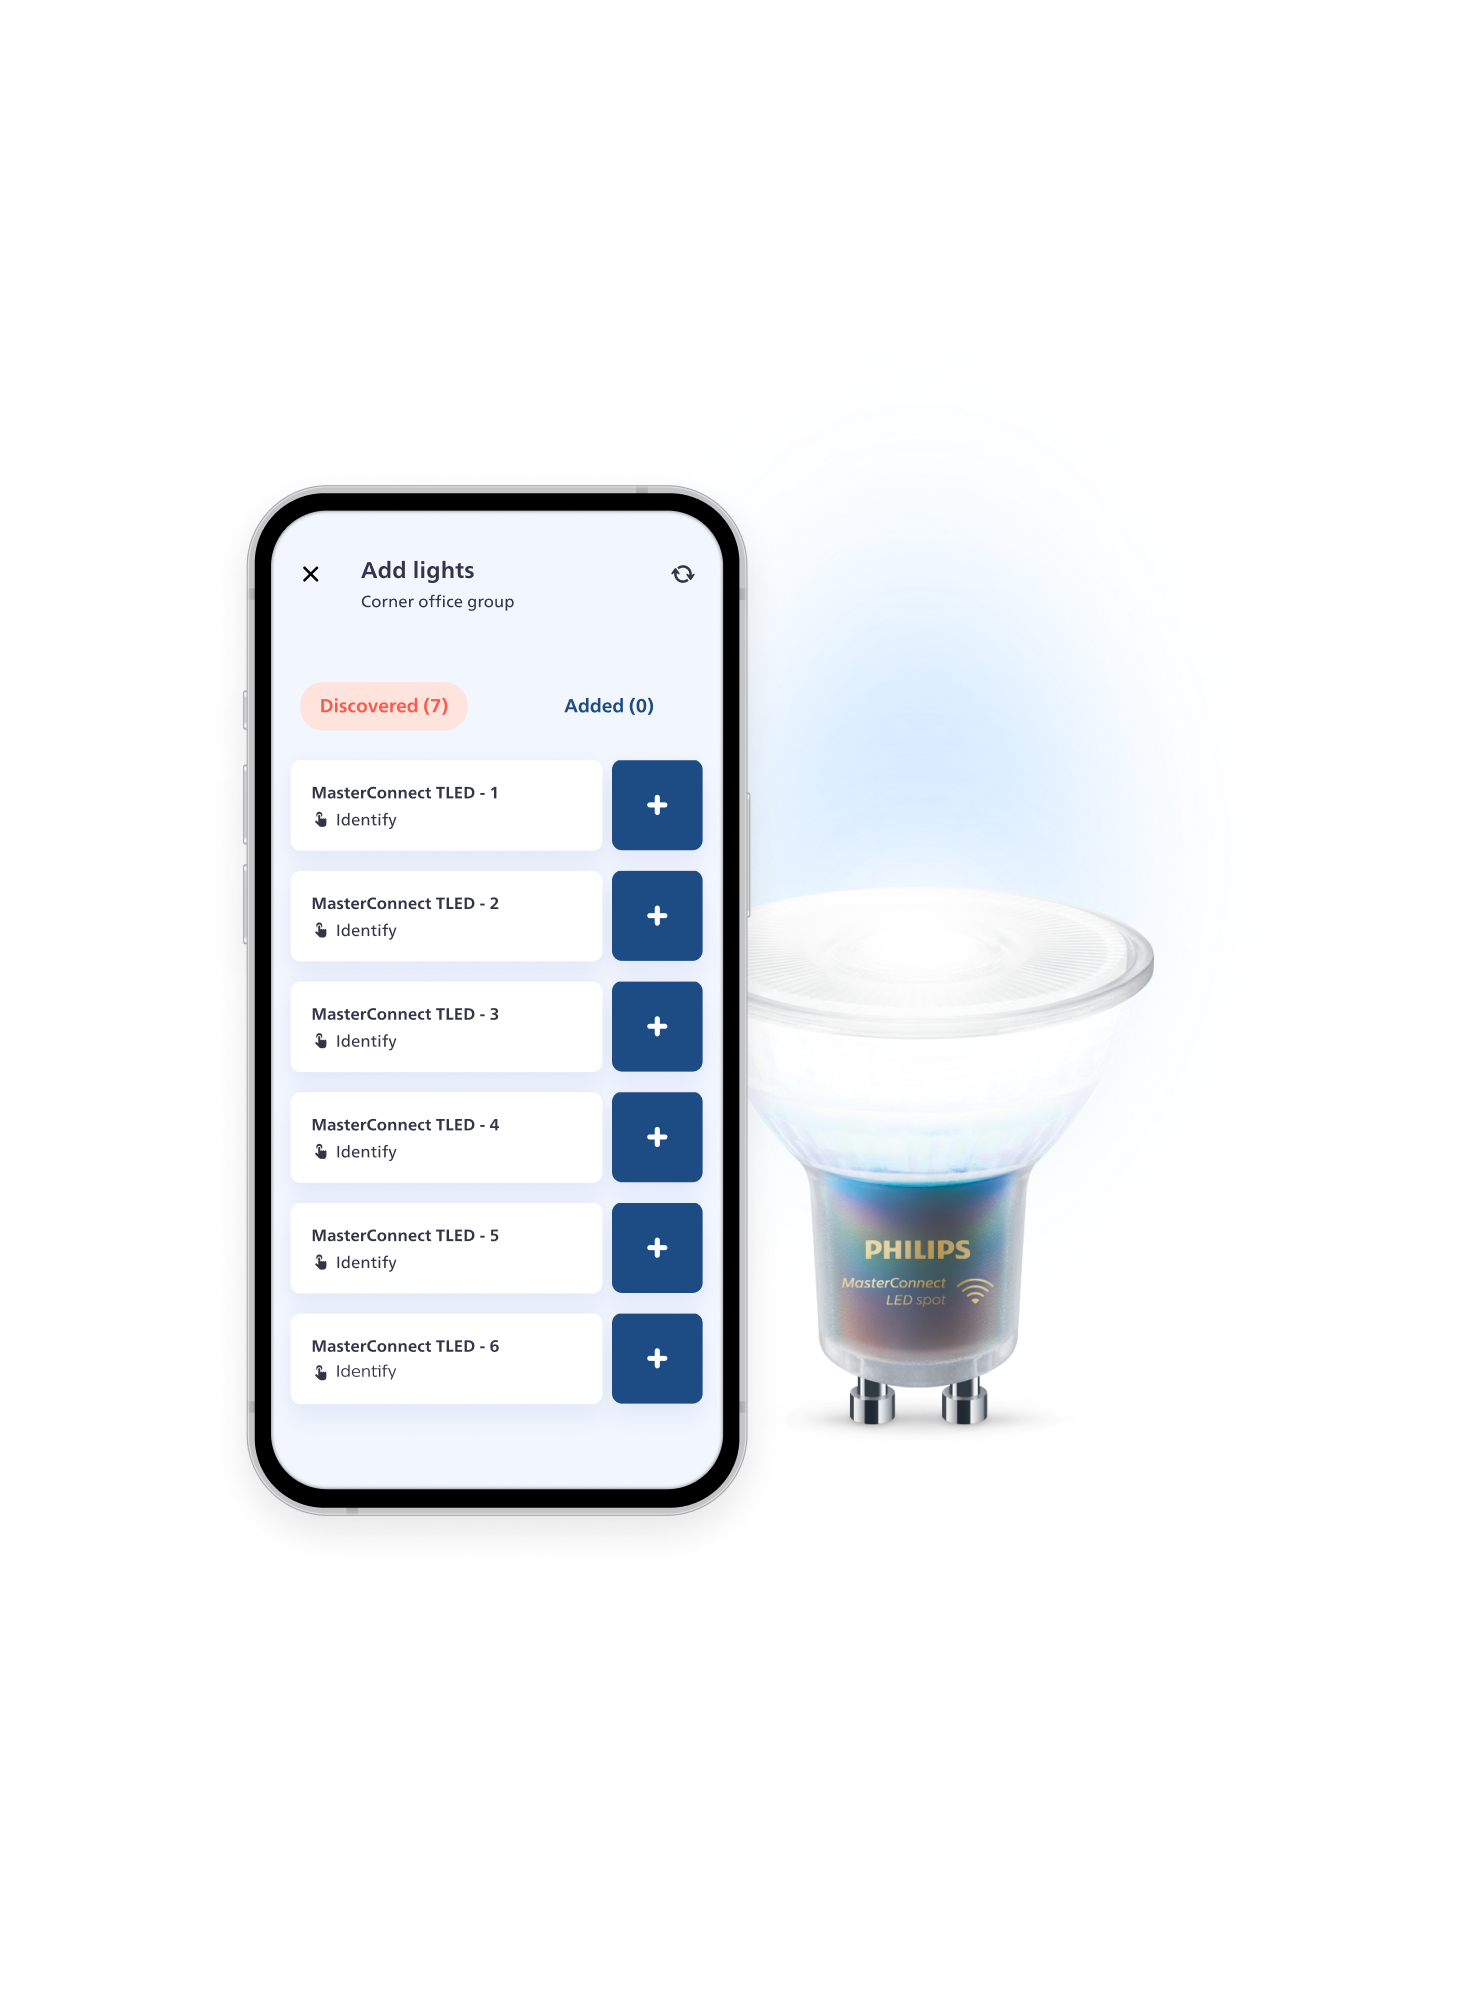 IoT app for Philips MasterConnect smart lighting